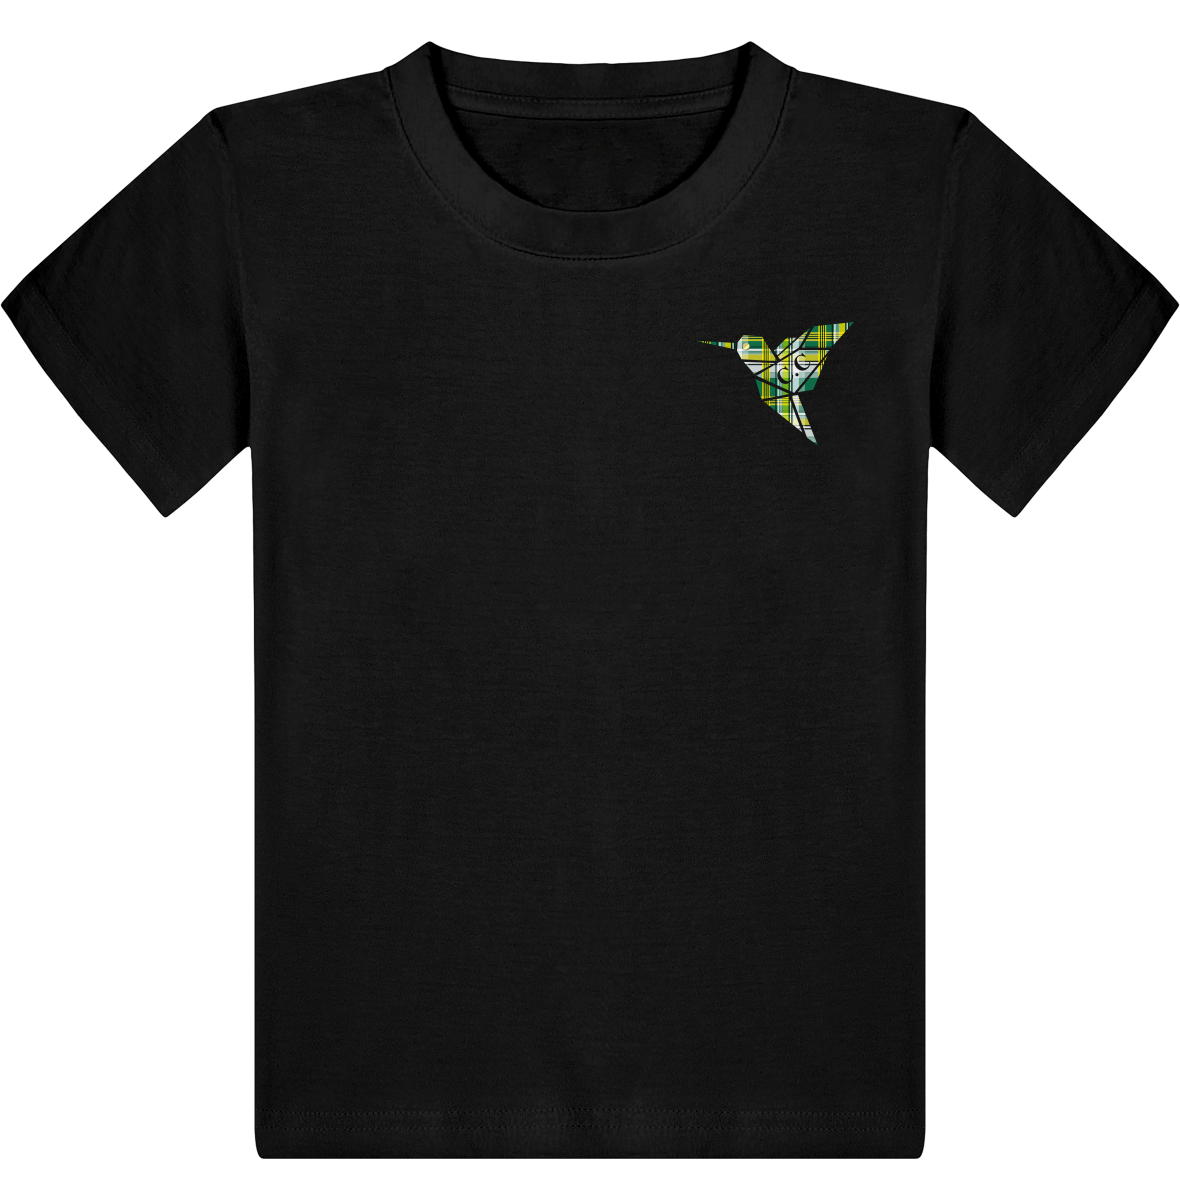 T-shirt Enfant C.C Madras Vert